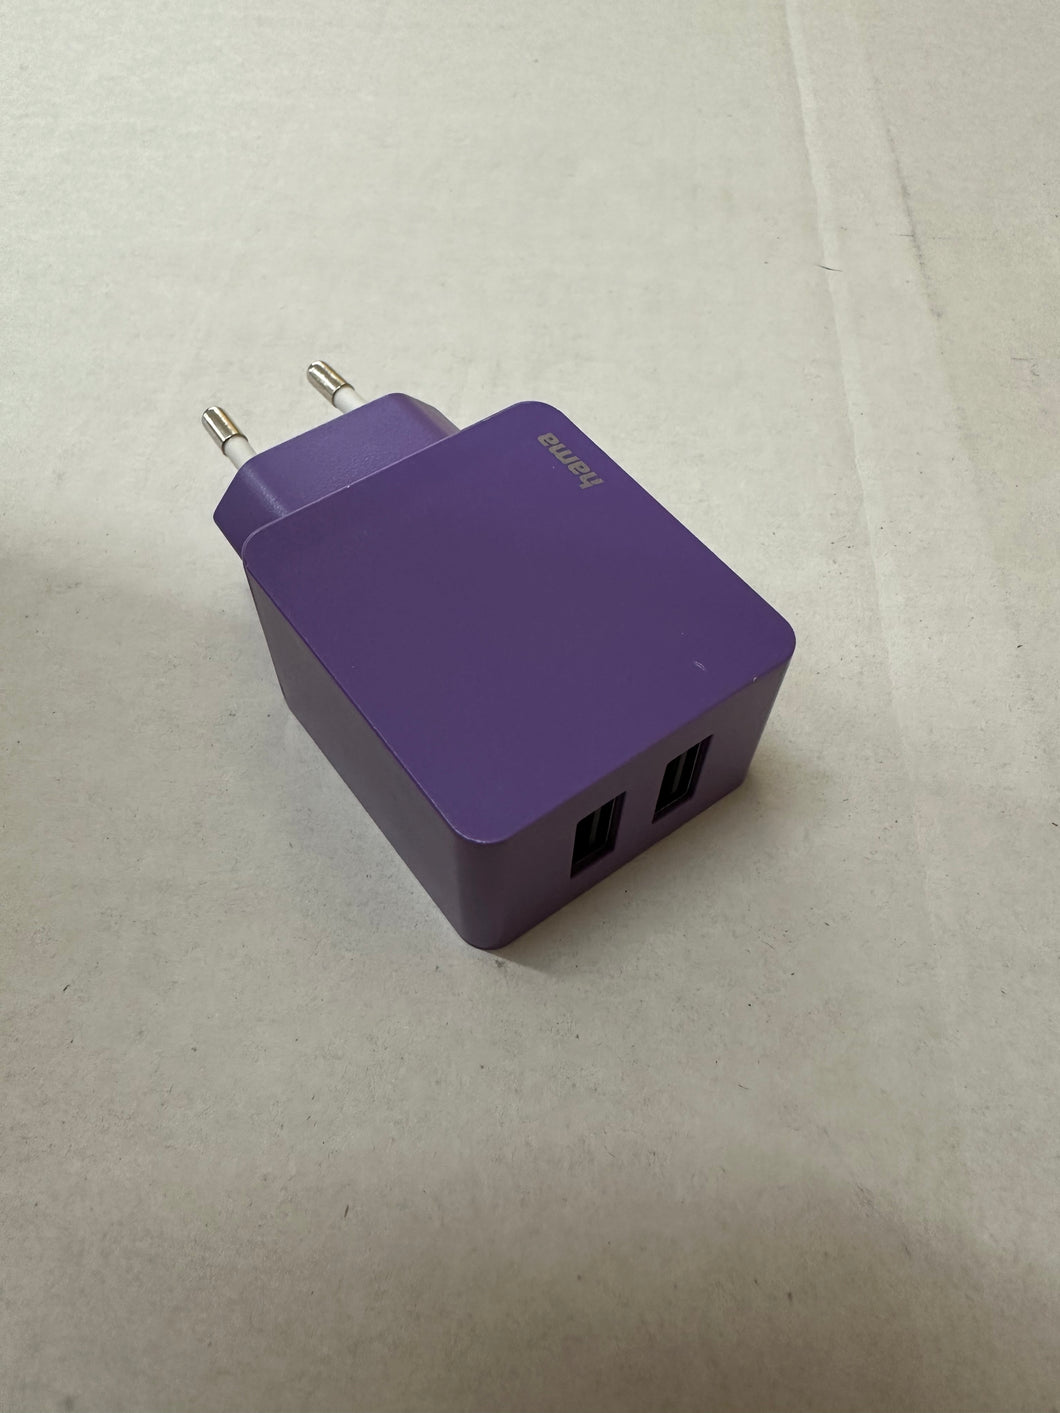 Hama Ladestecker für 2 USB Anschlüsse lila